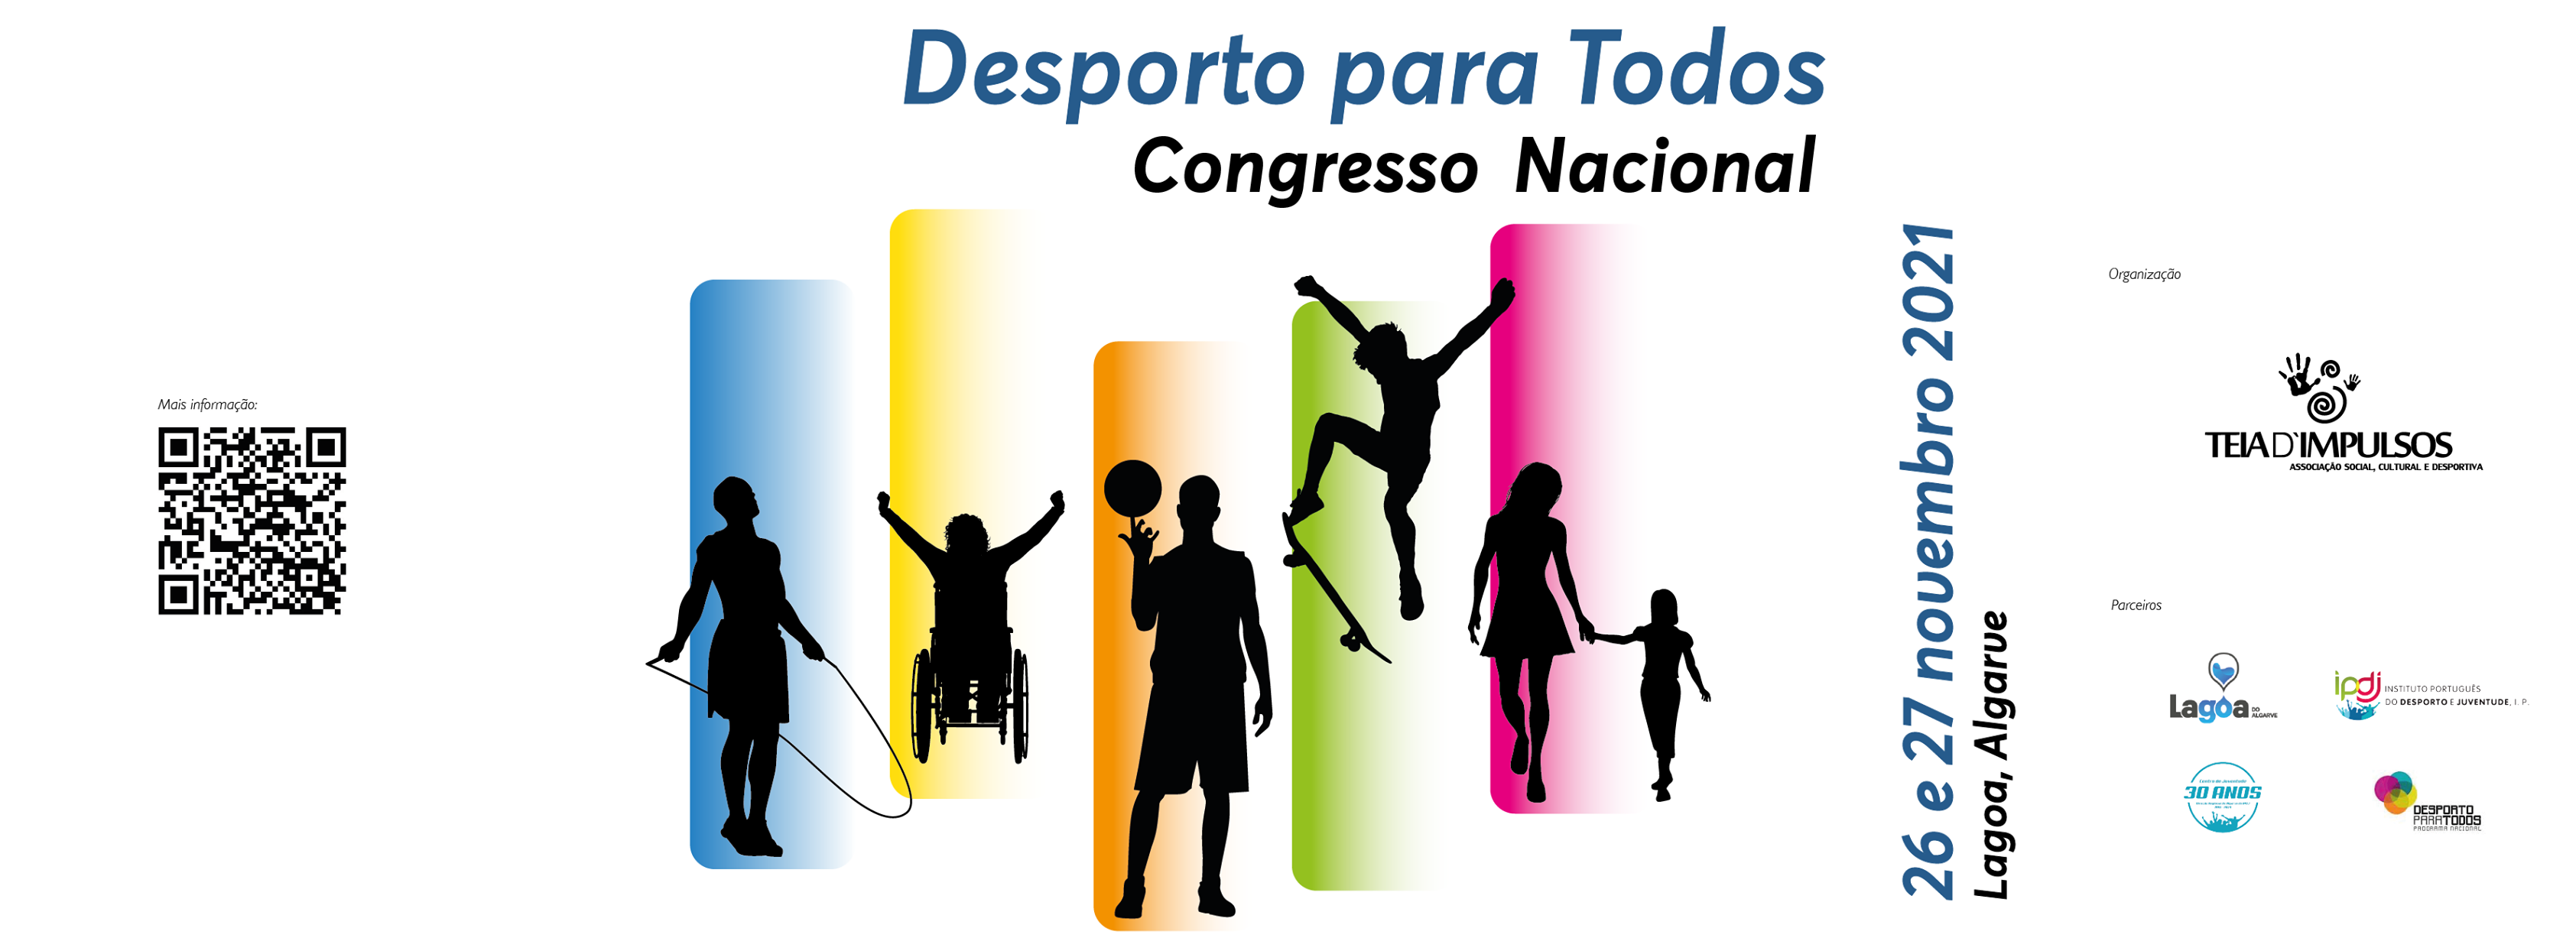 Congresso Nacional Desporto para Todos